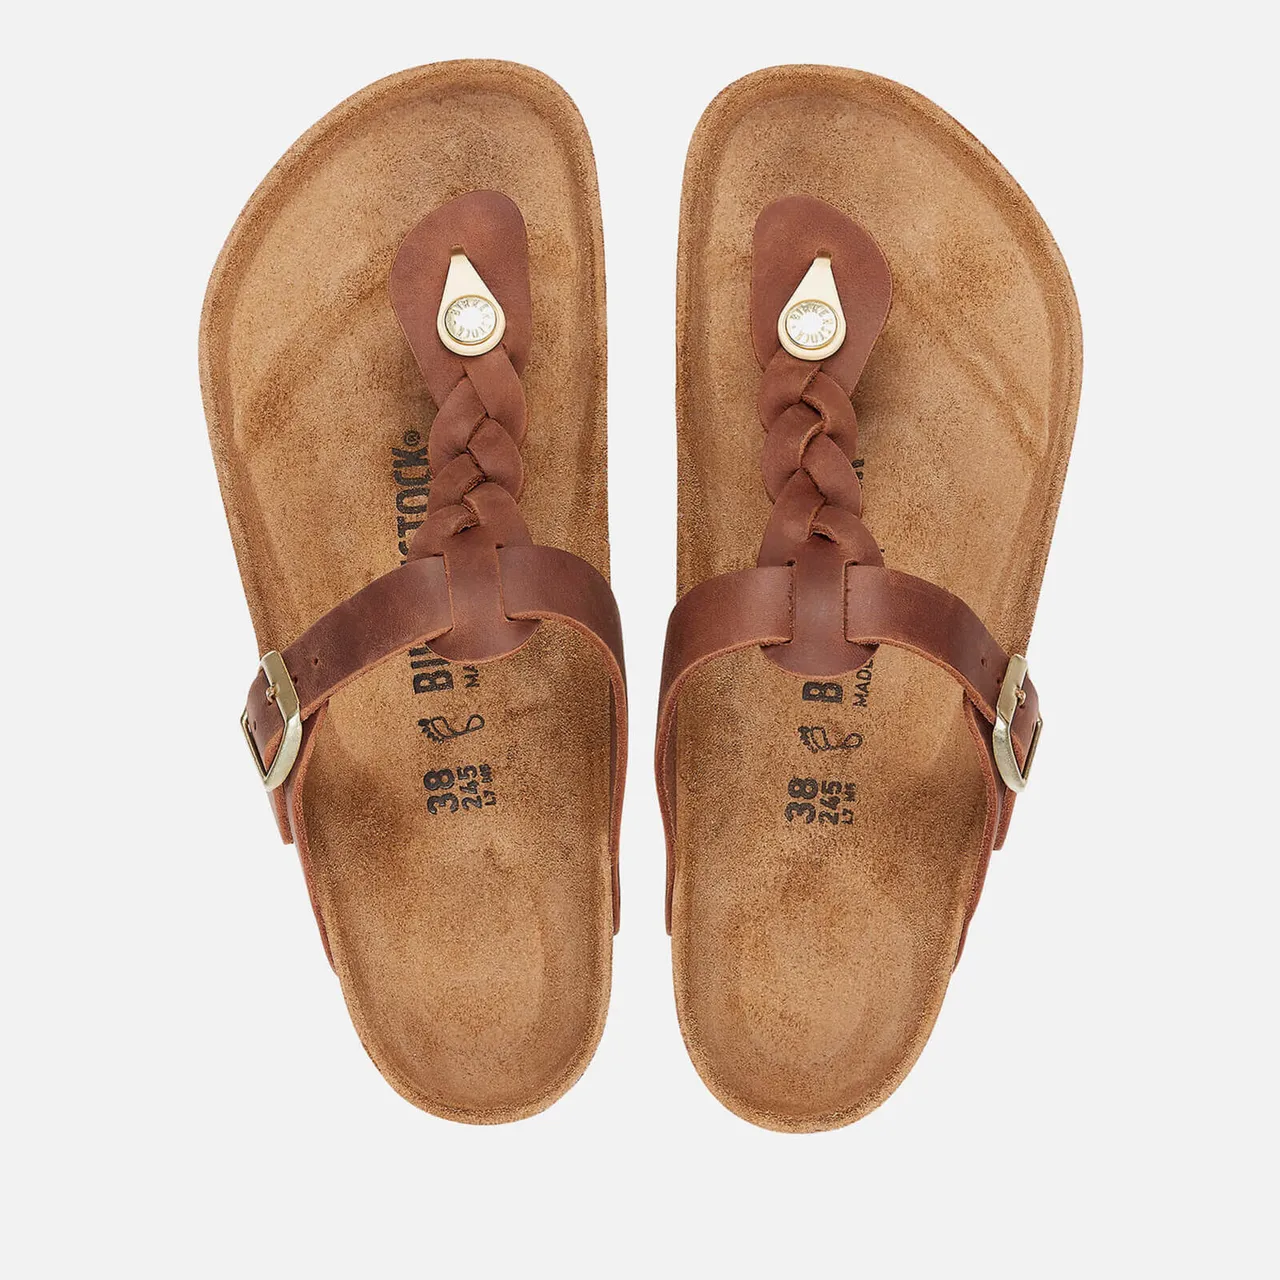 Birkenstock Gizeh Braided Leather Sandals - EU 42/UK